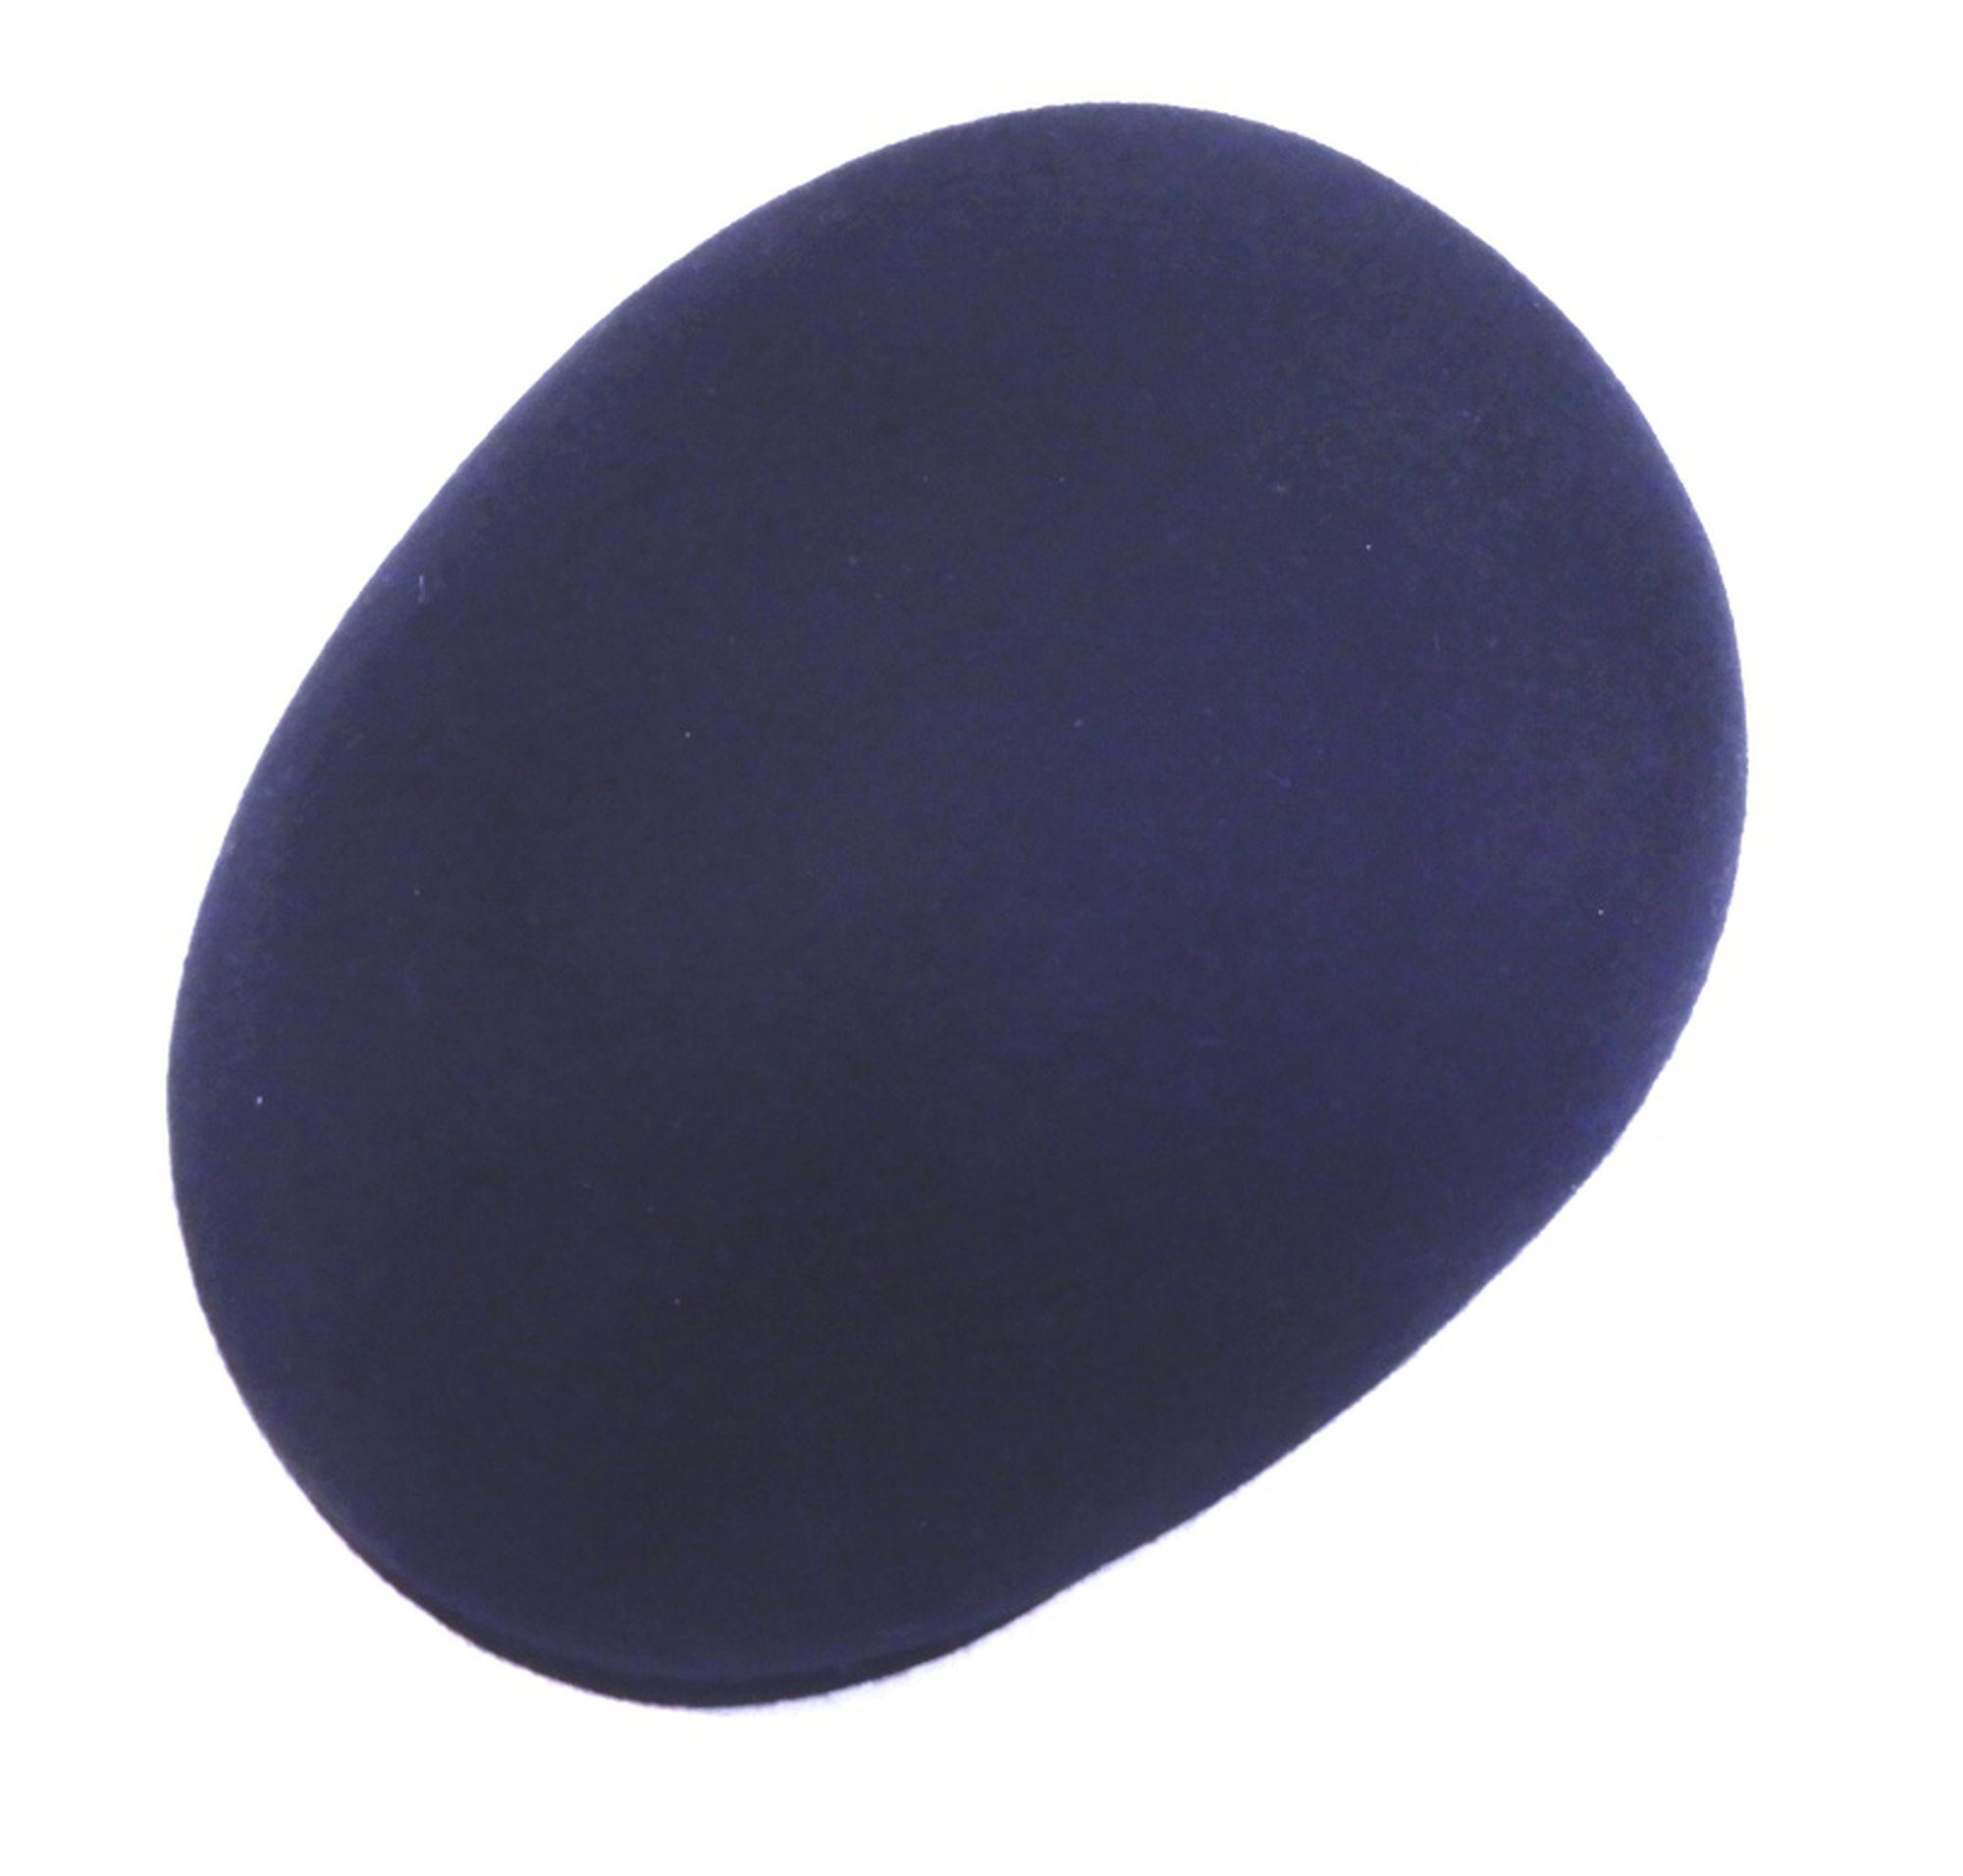 Chaplino Flat Cap aus dunkelblau Wollfilz hochwertigem